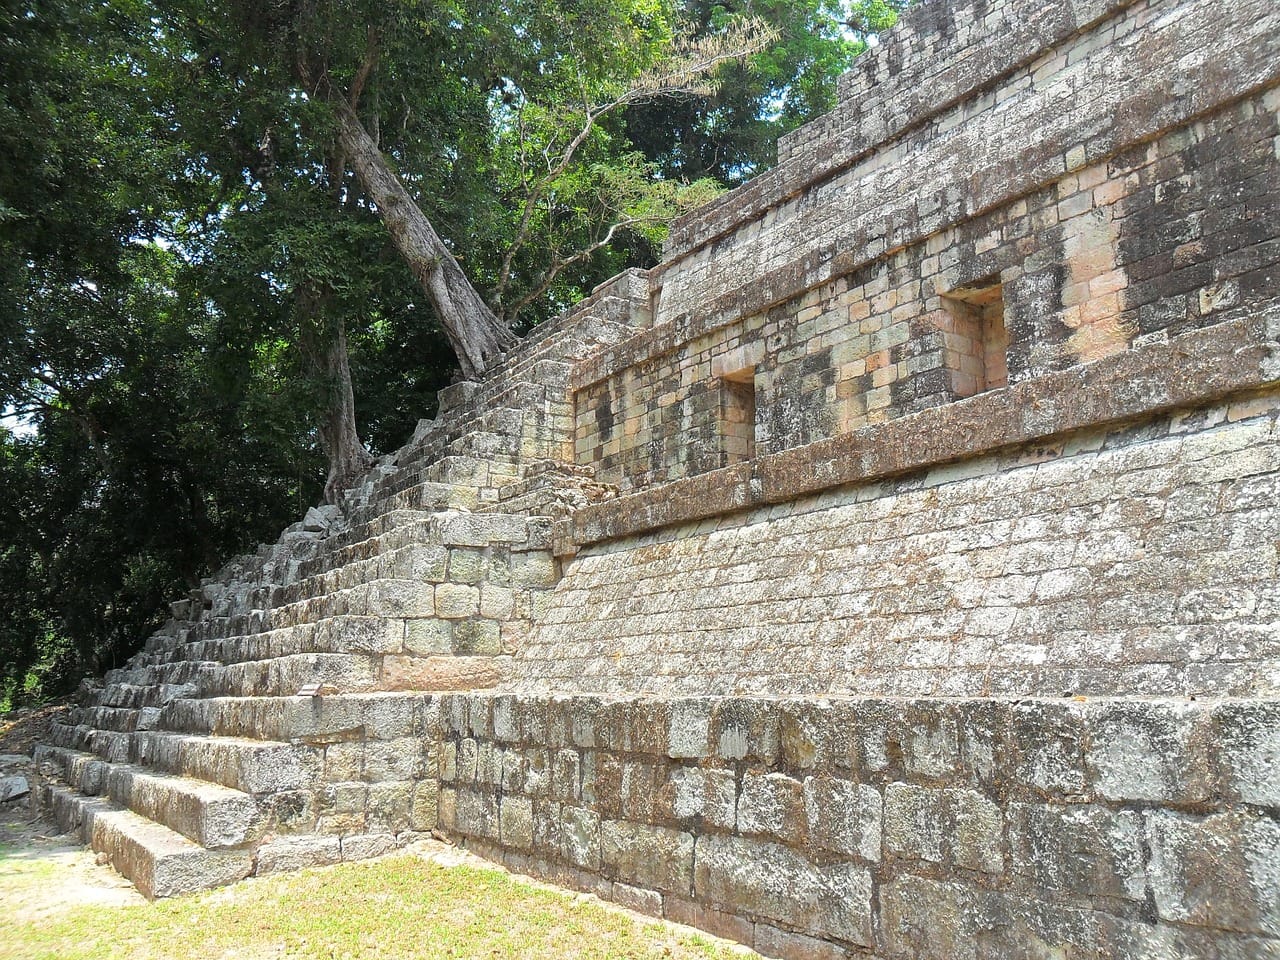 Copan ruins in Honduras